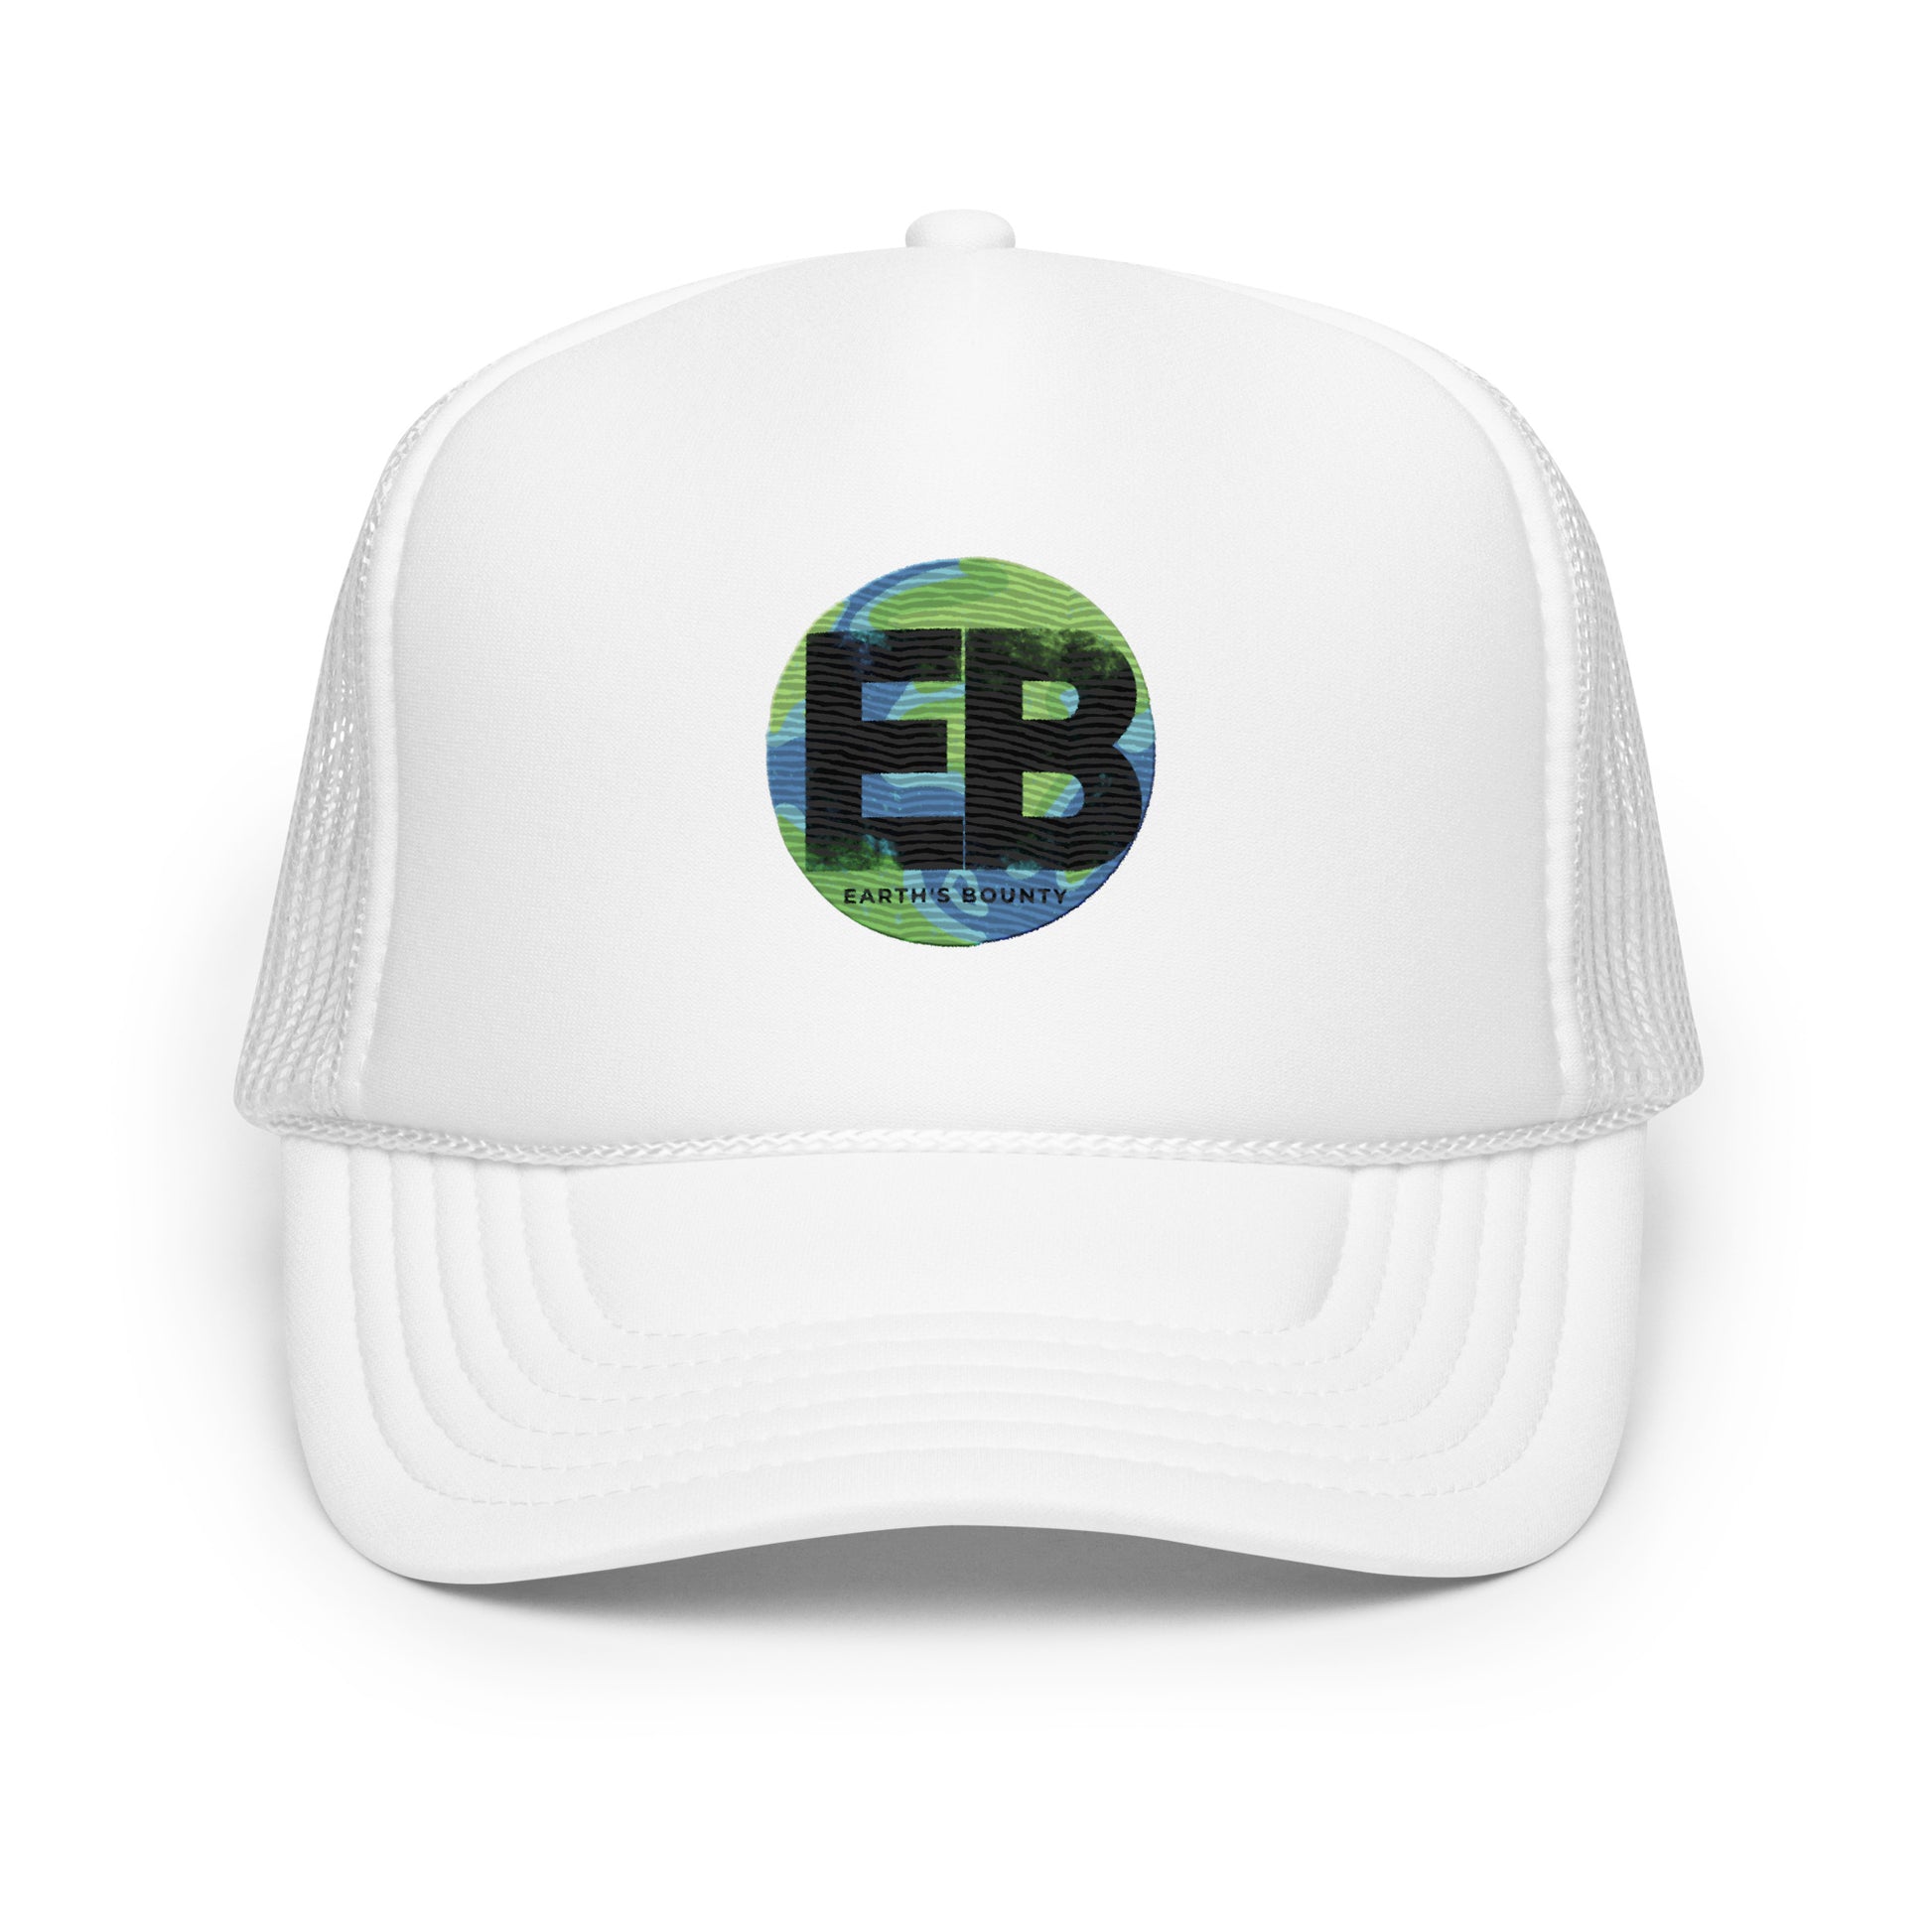 EB Trucker Hat.